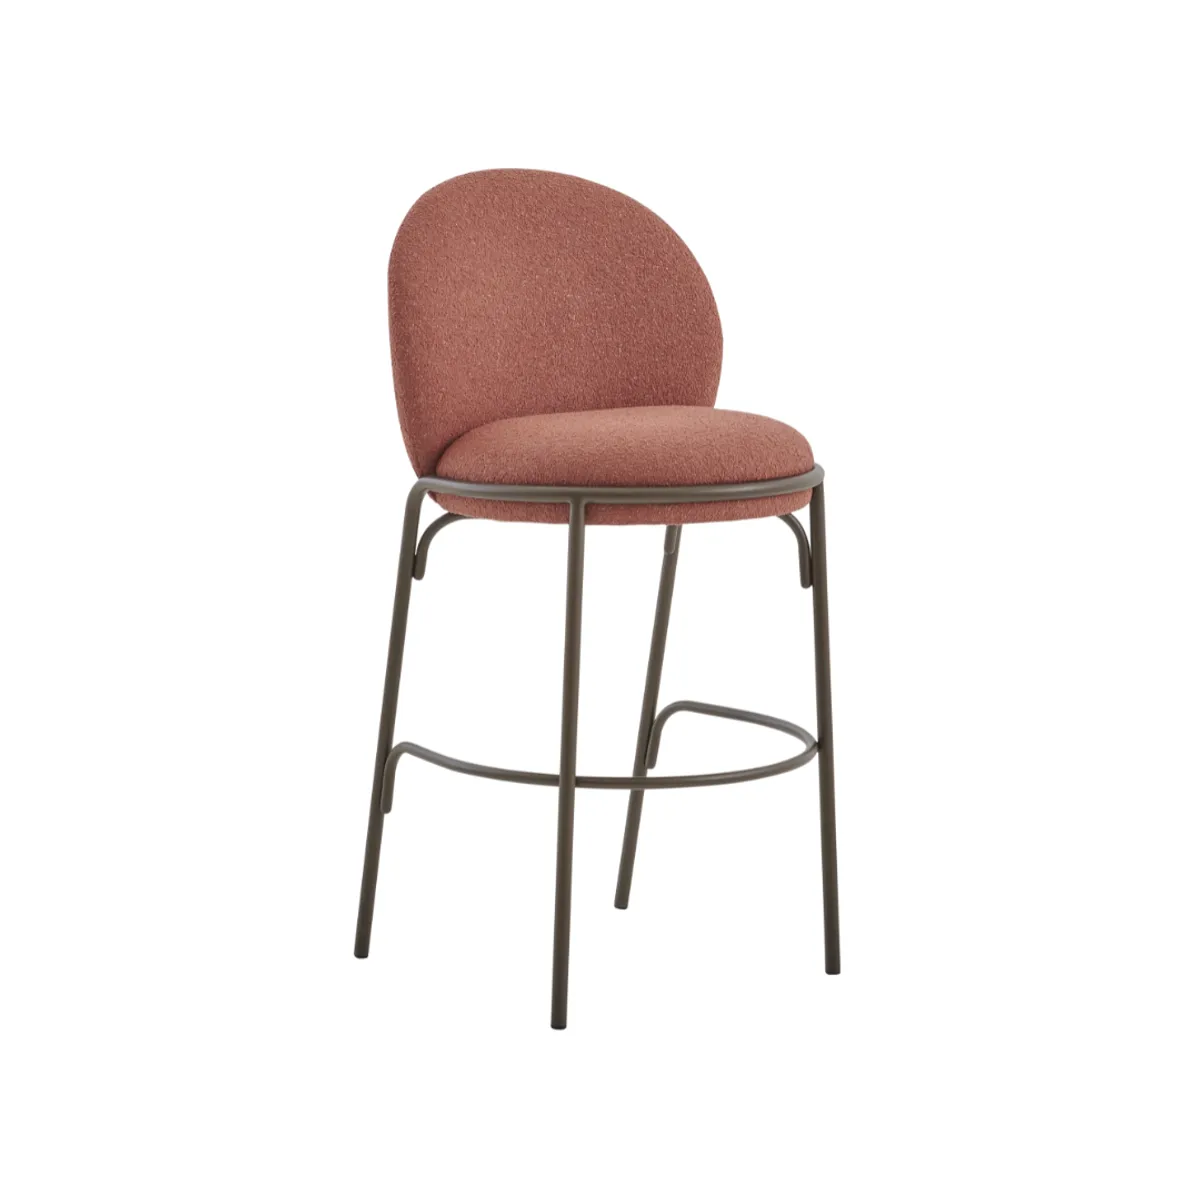 Scallop bar stool 1